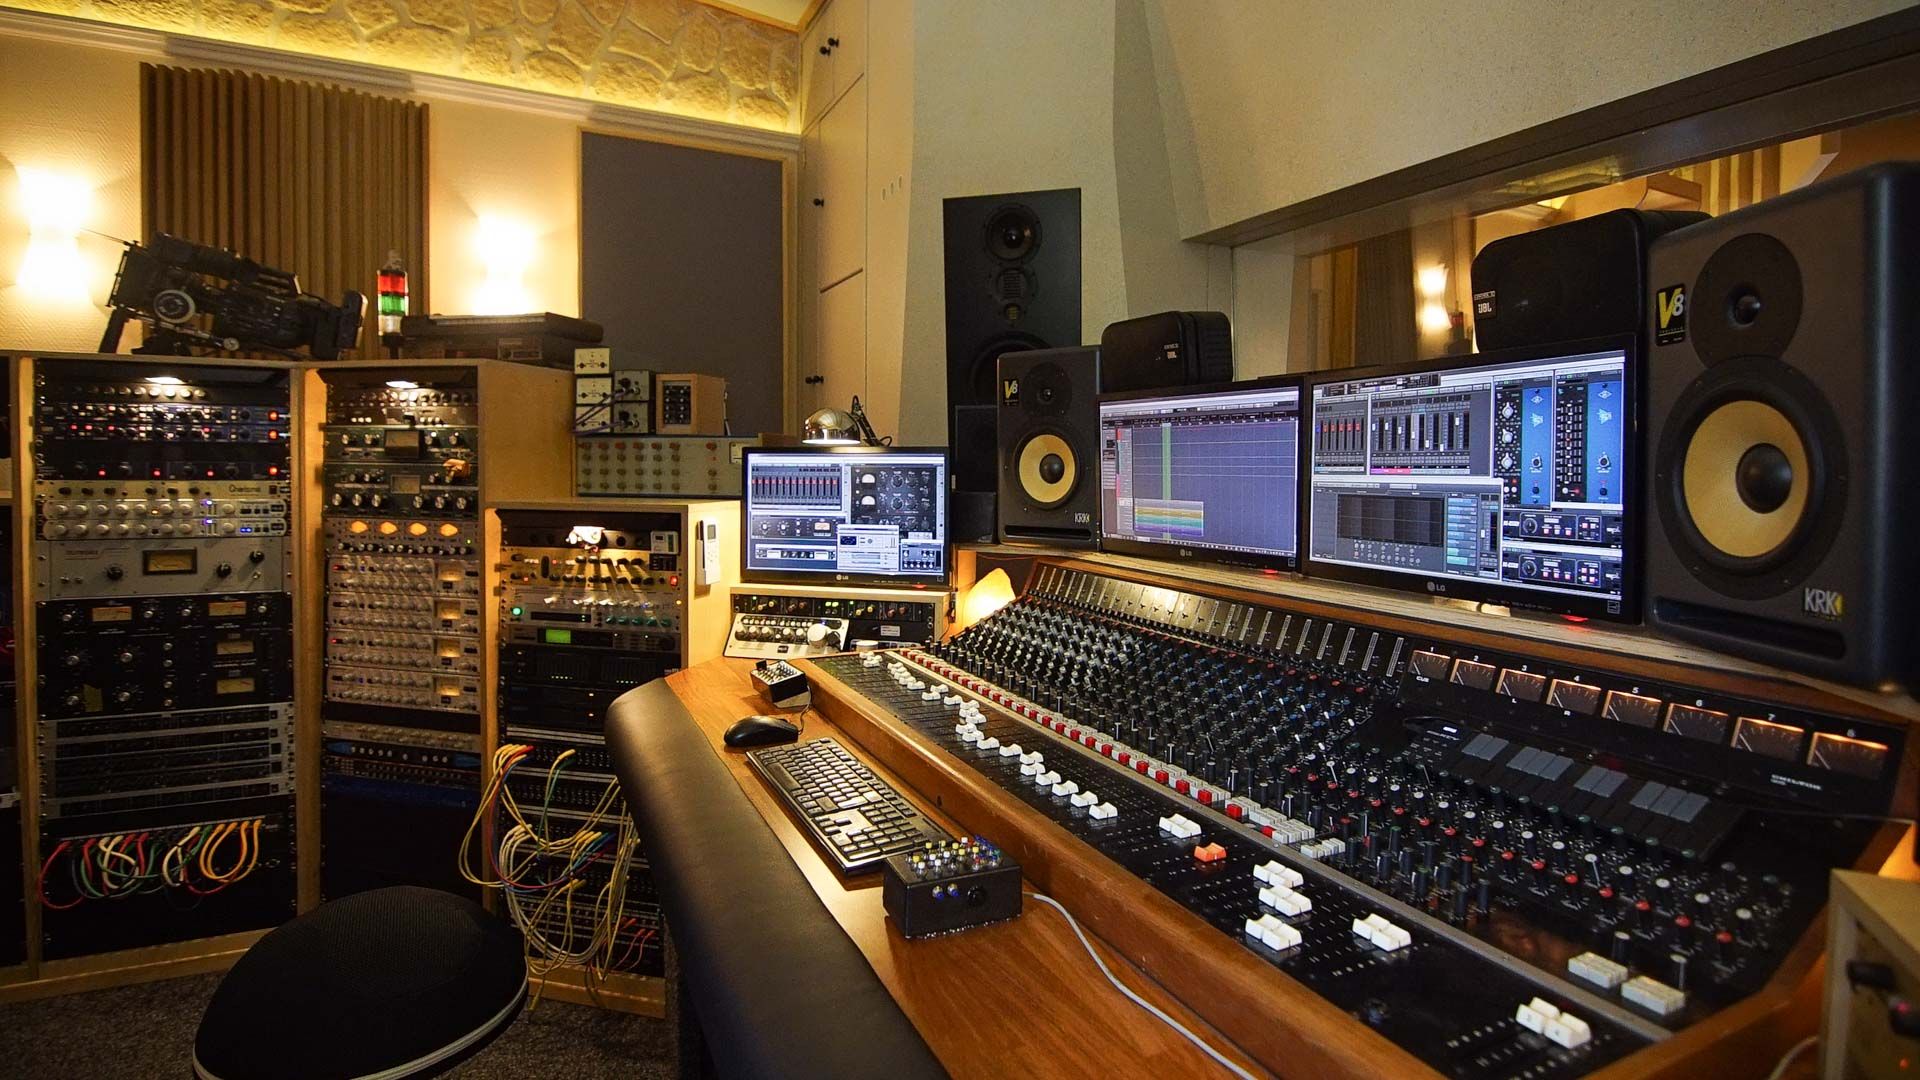 Recording Studio wallpaper and themes